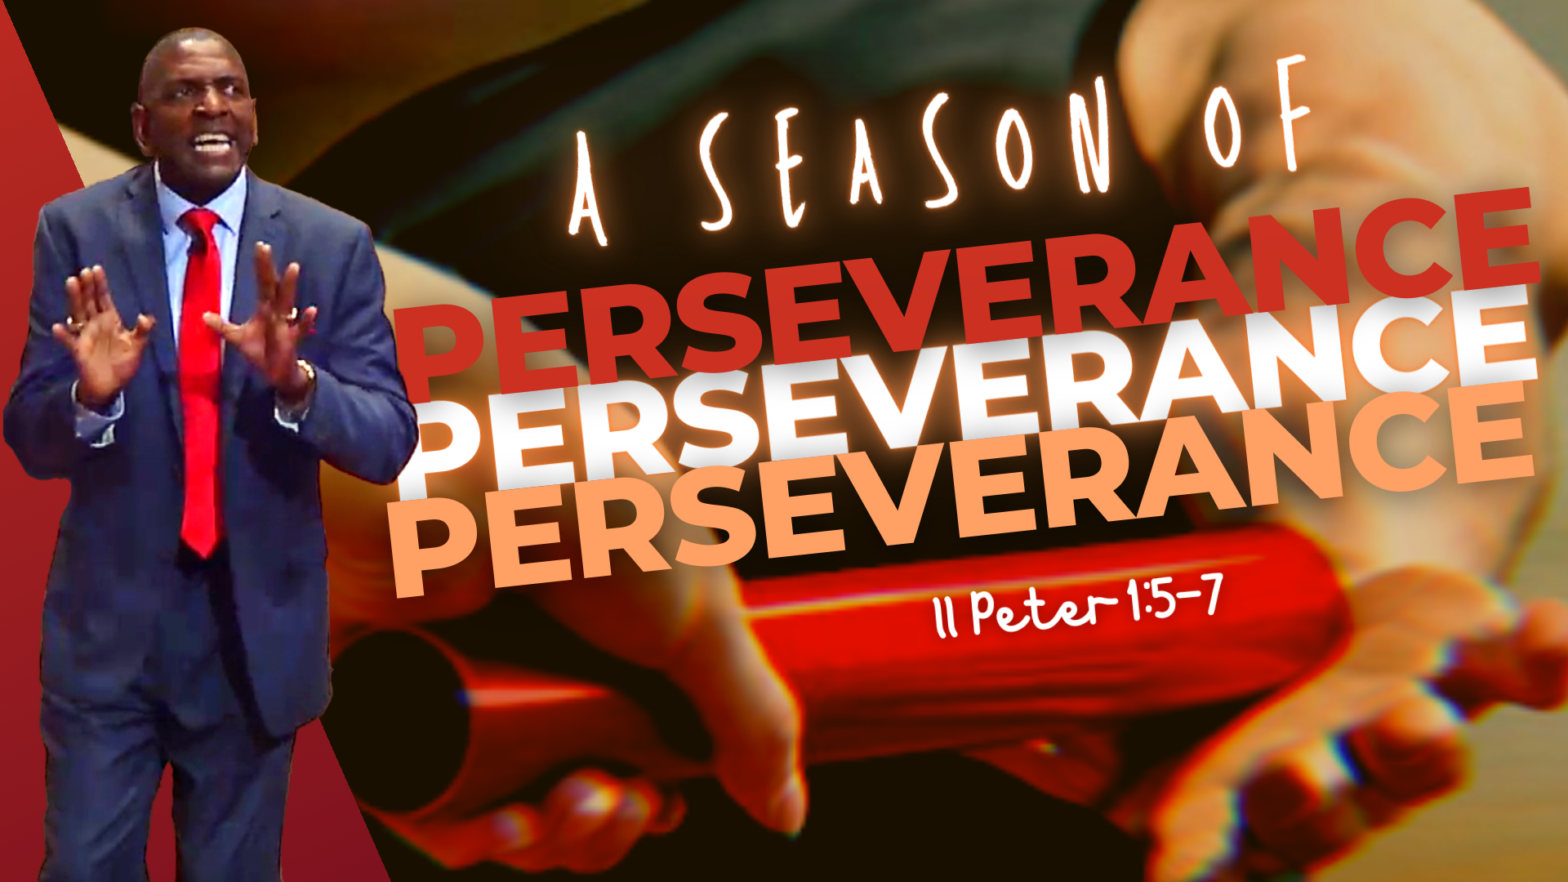 A Season of Perseverance